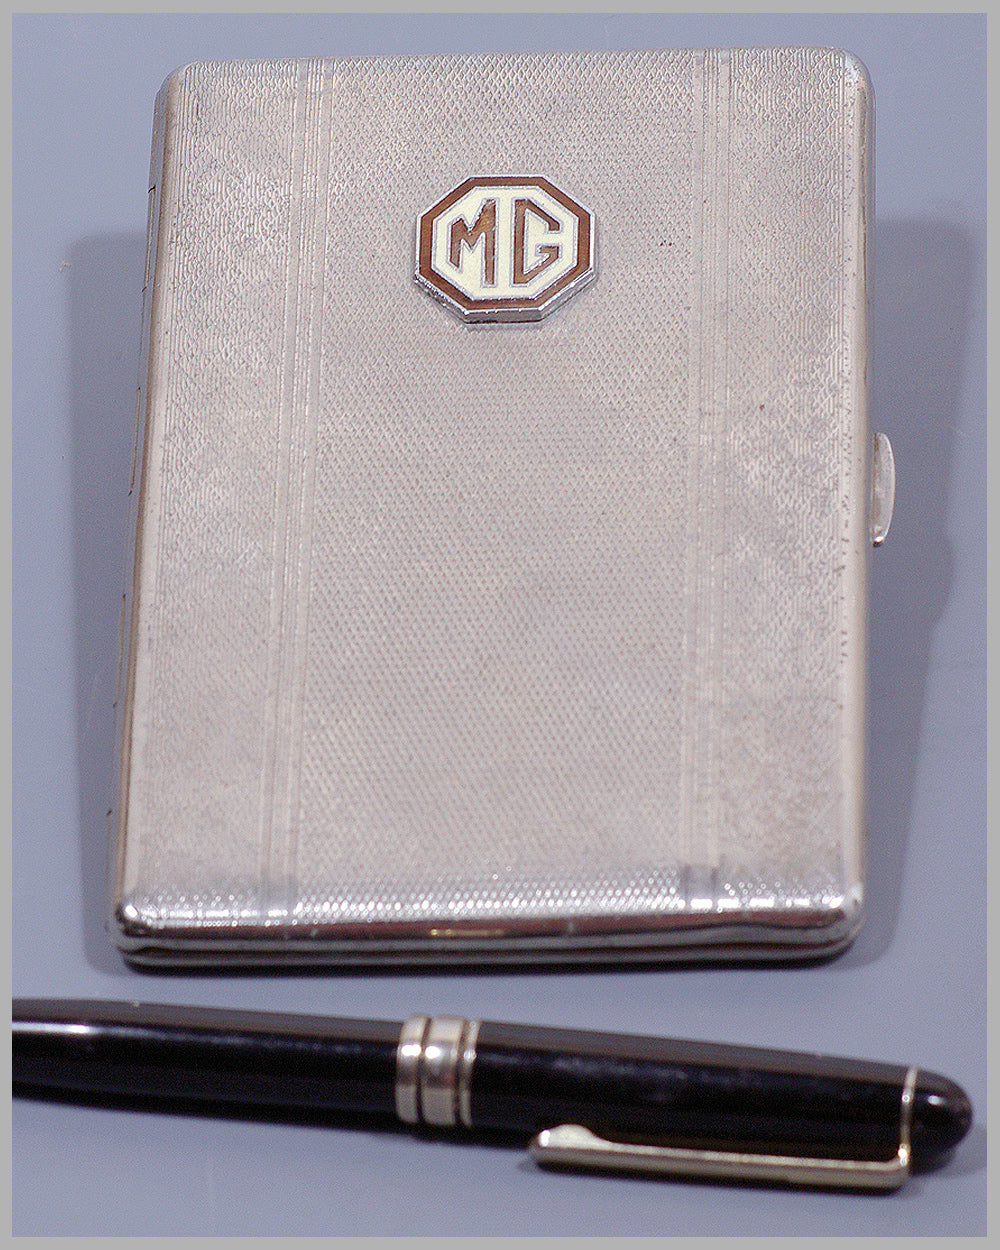 MG Cigarette case, 1940’s, UK